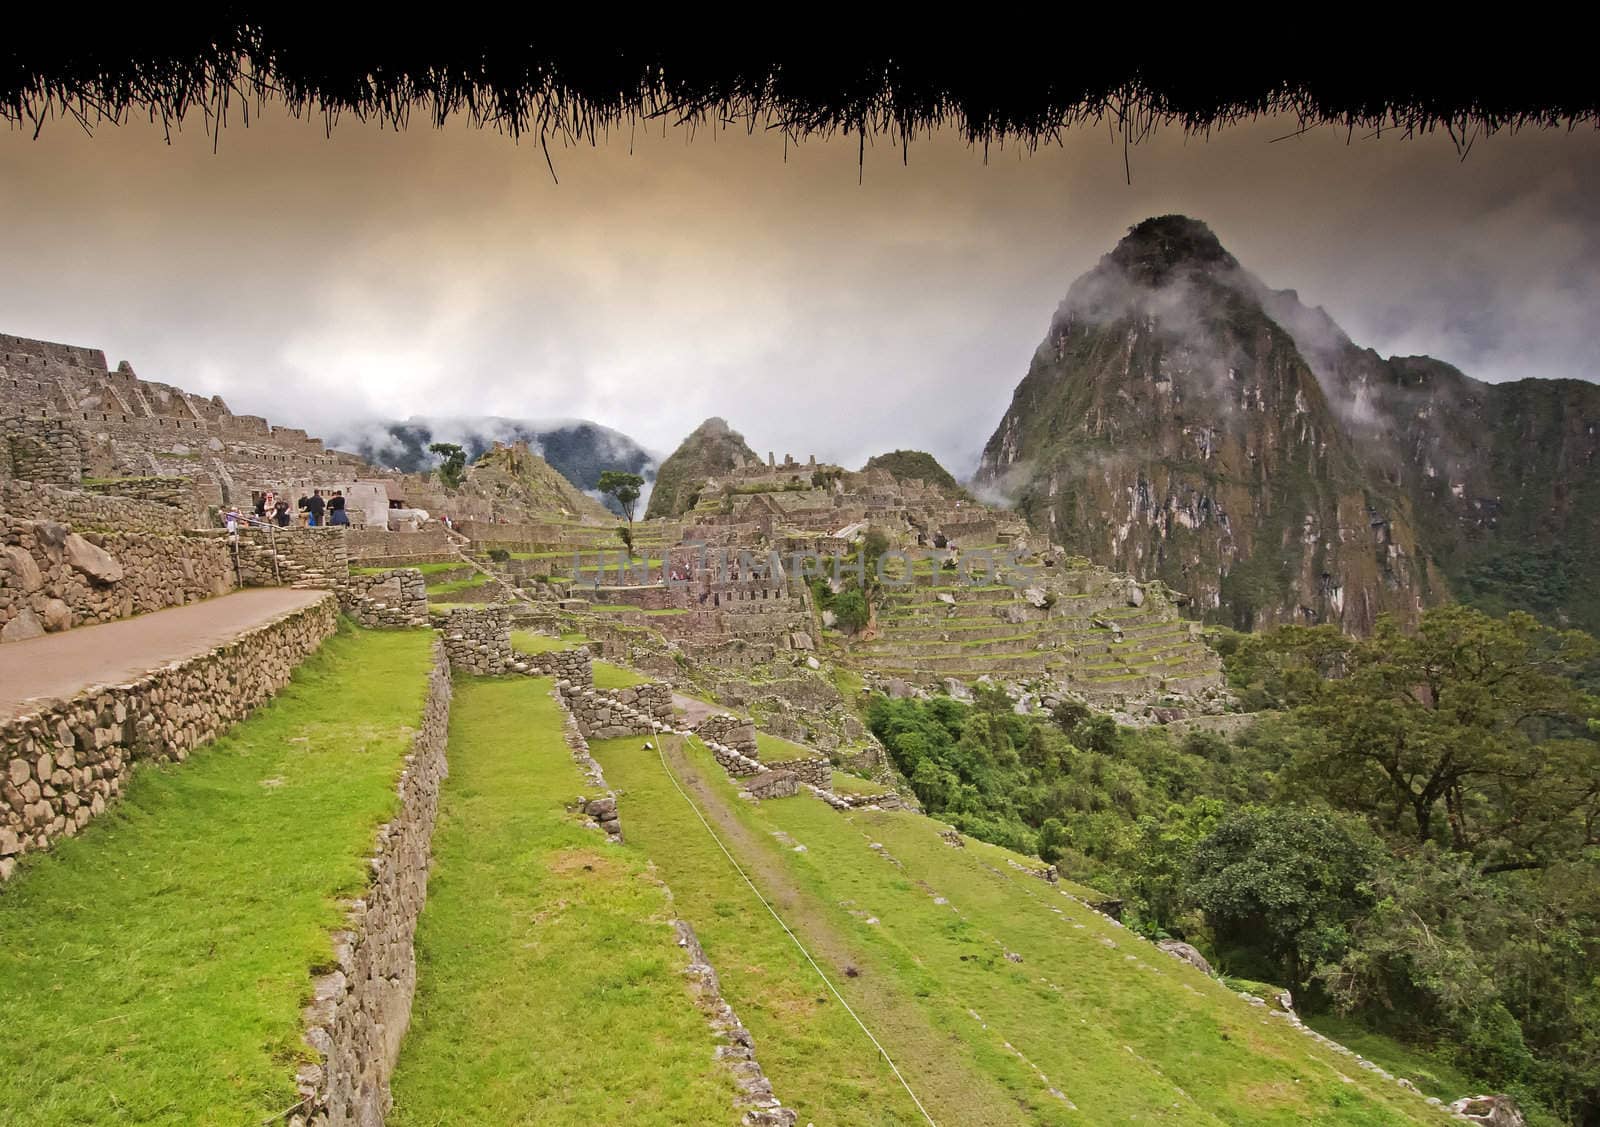 Machu Picchu - The Lost City of the Incas in Peru. A Unesco World Heritage Site